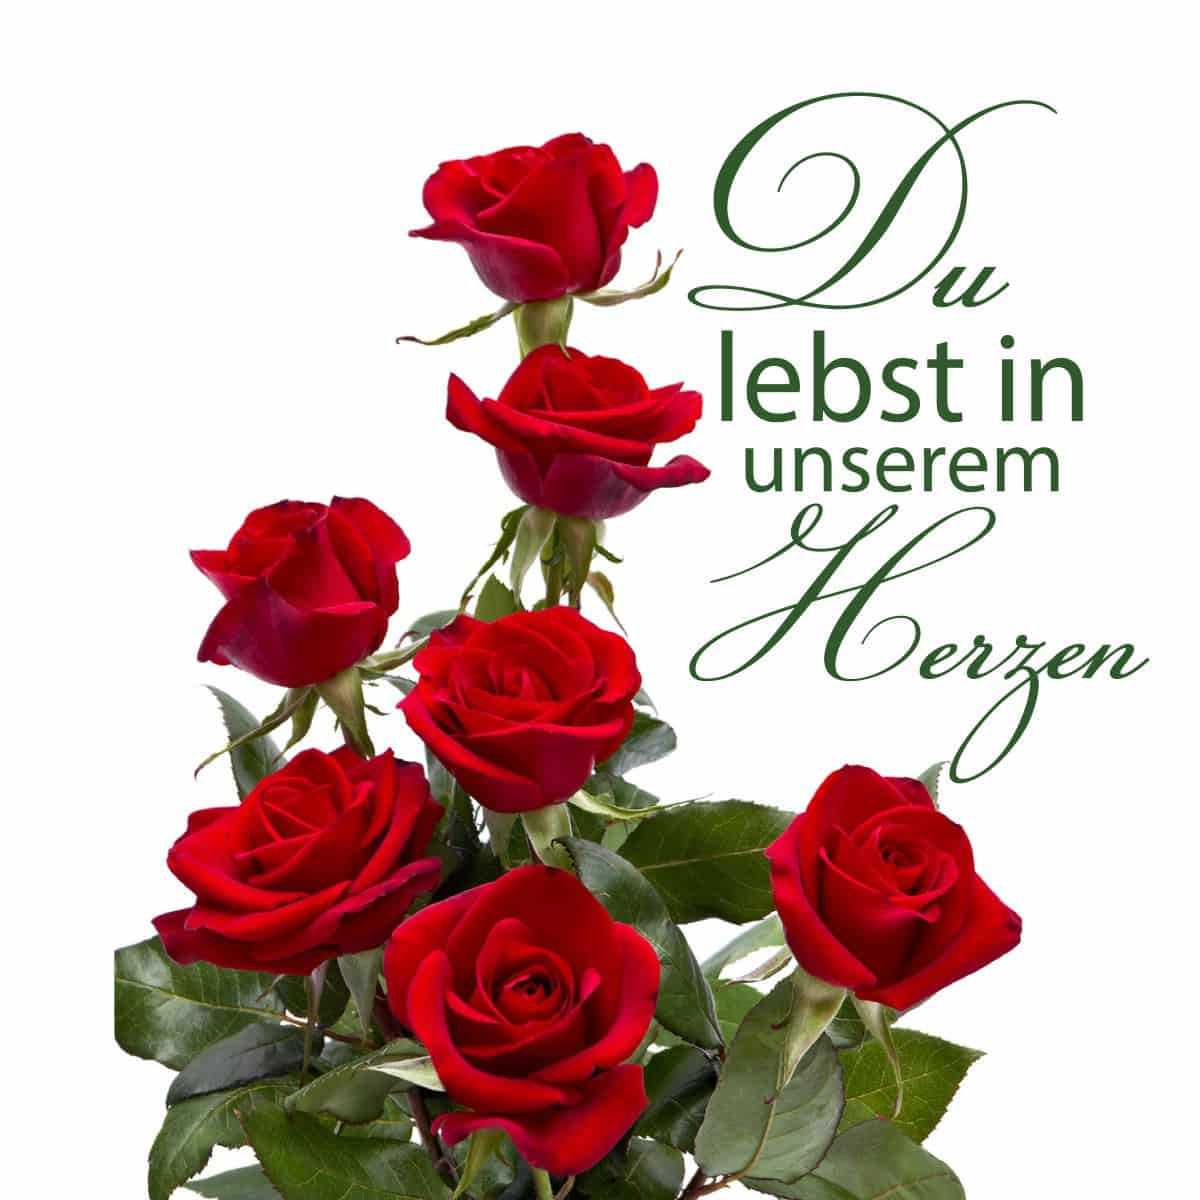 Motiv rote Rosen, Text "Du lebst in unserem Herzen"